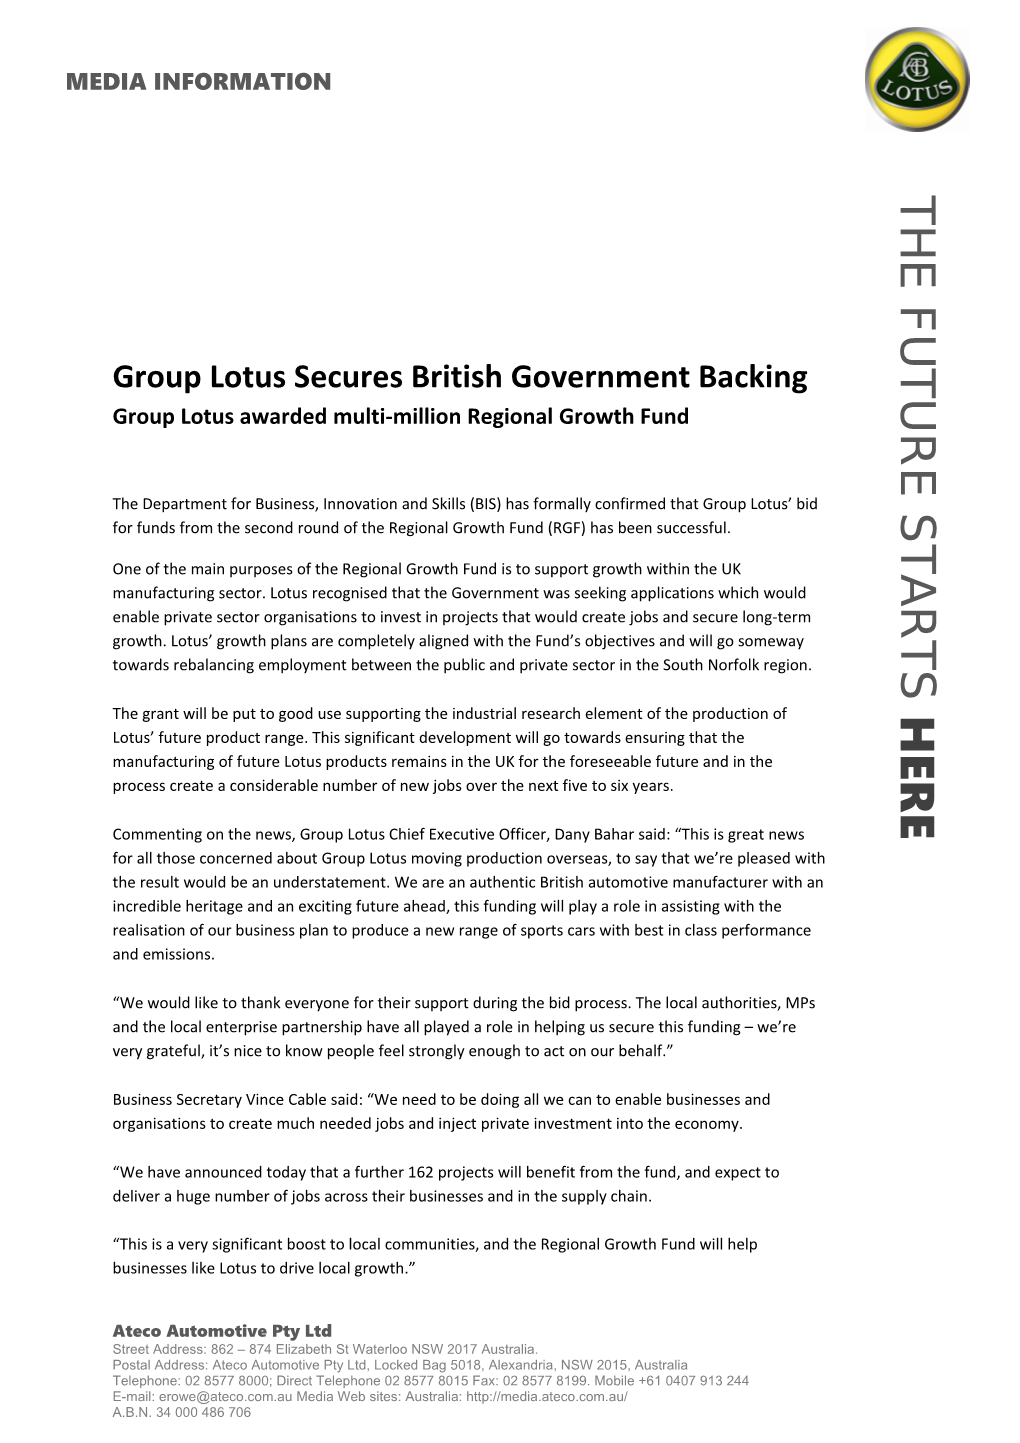 Group Lotus Secures British Government Backing Group Lotus Awarded Multi-Million Regional